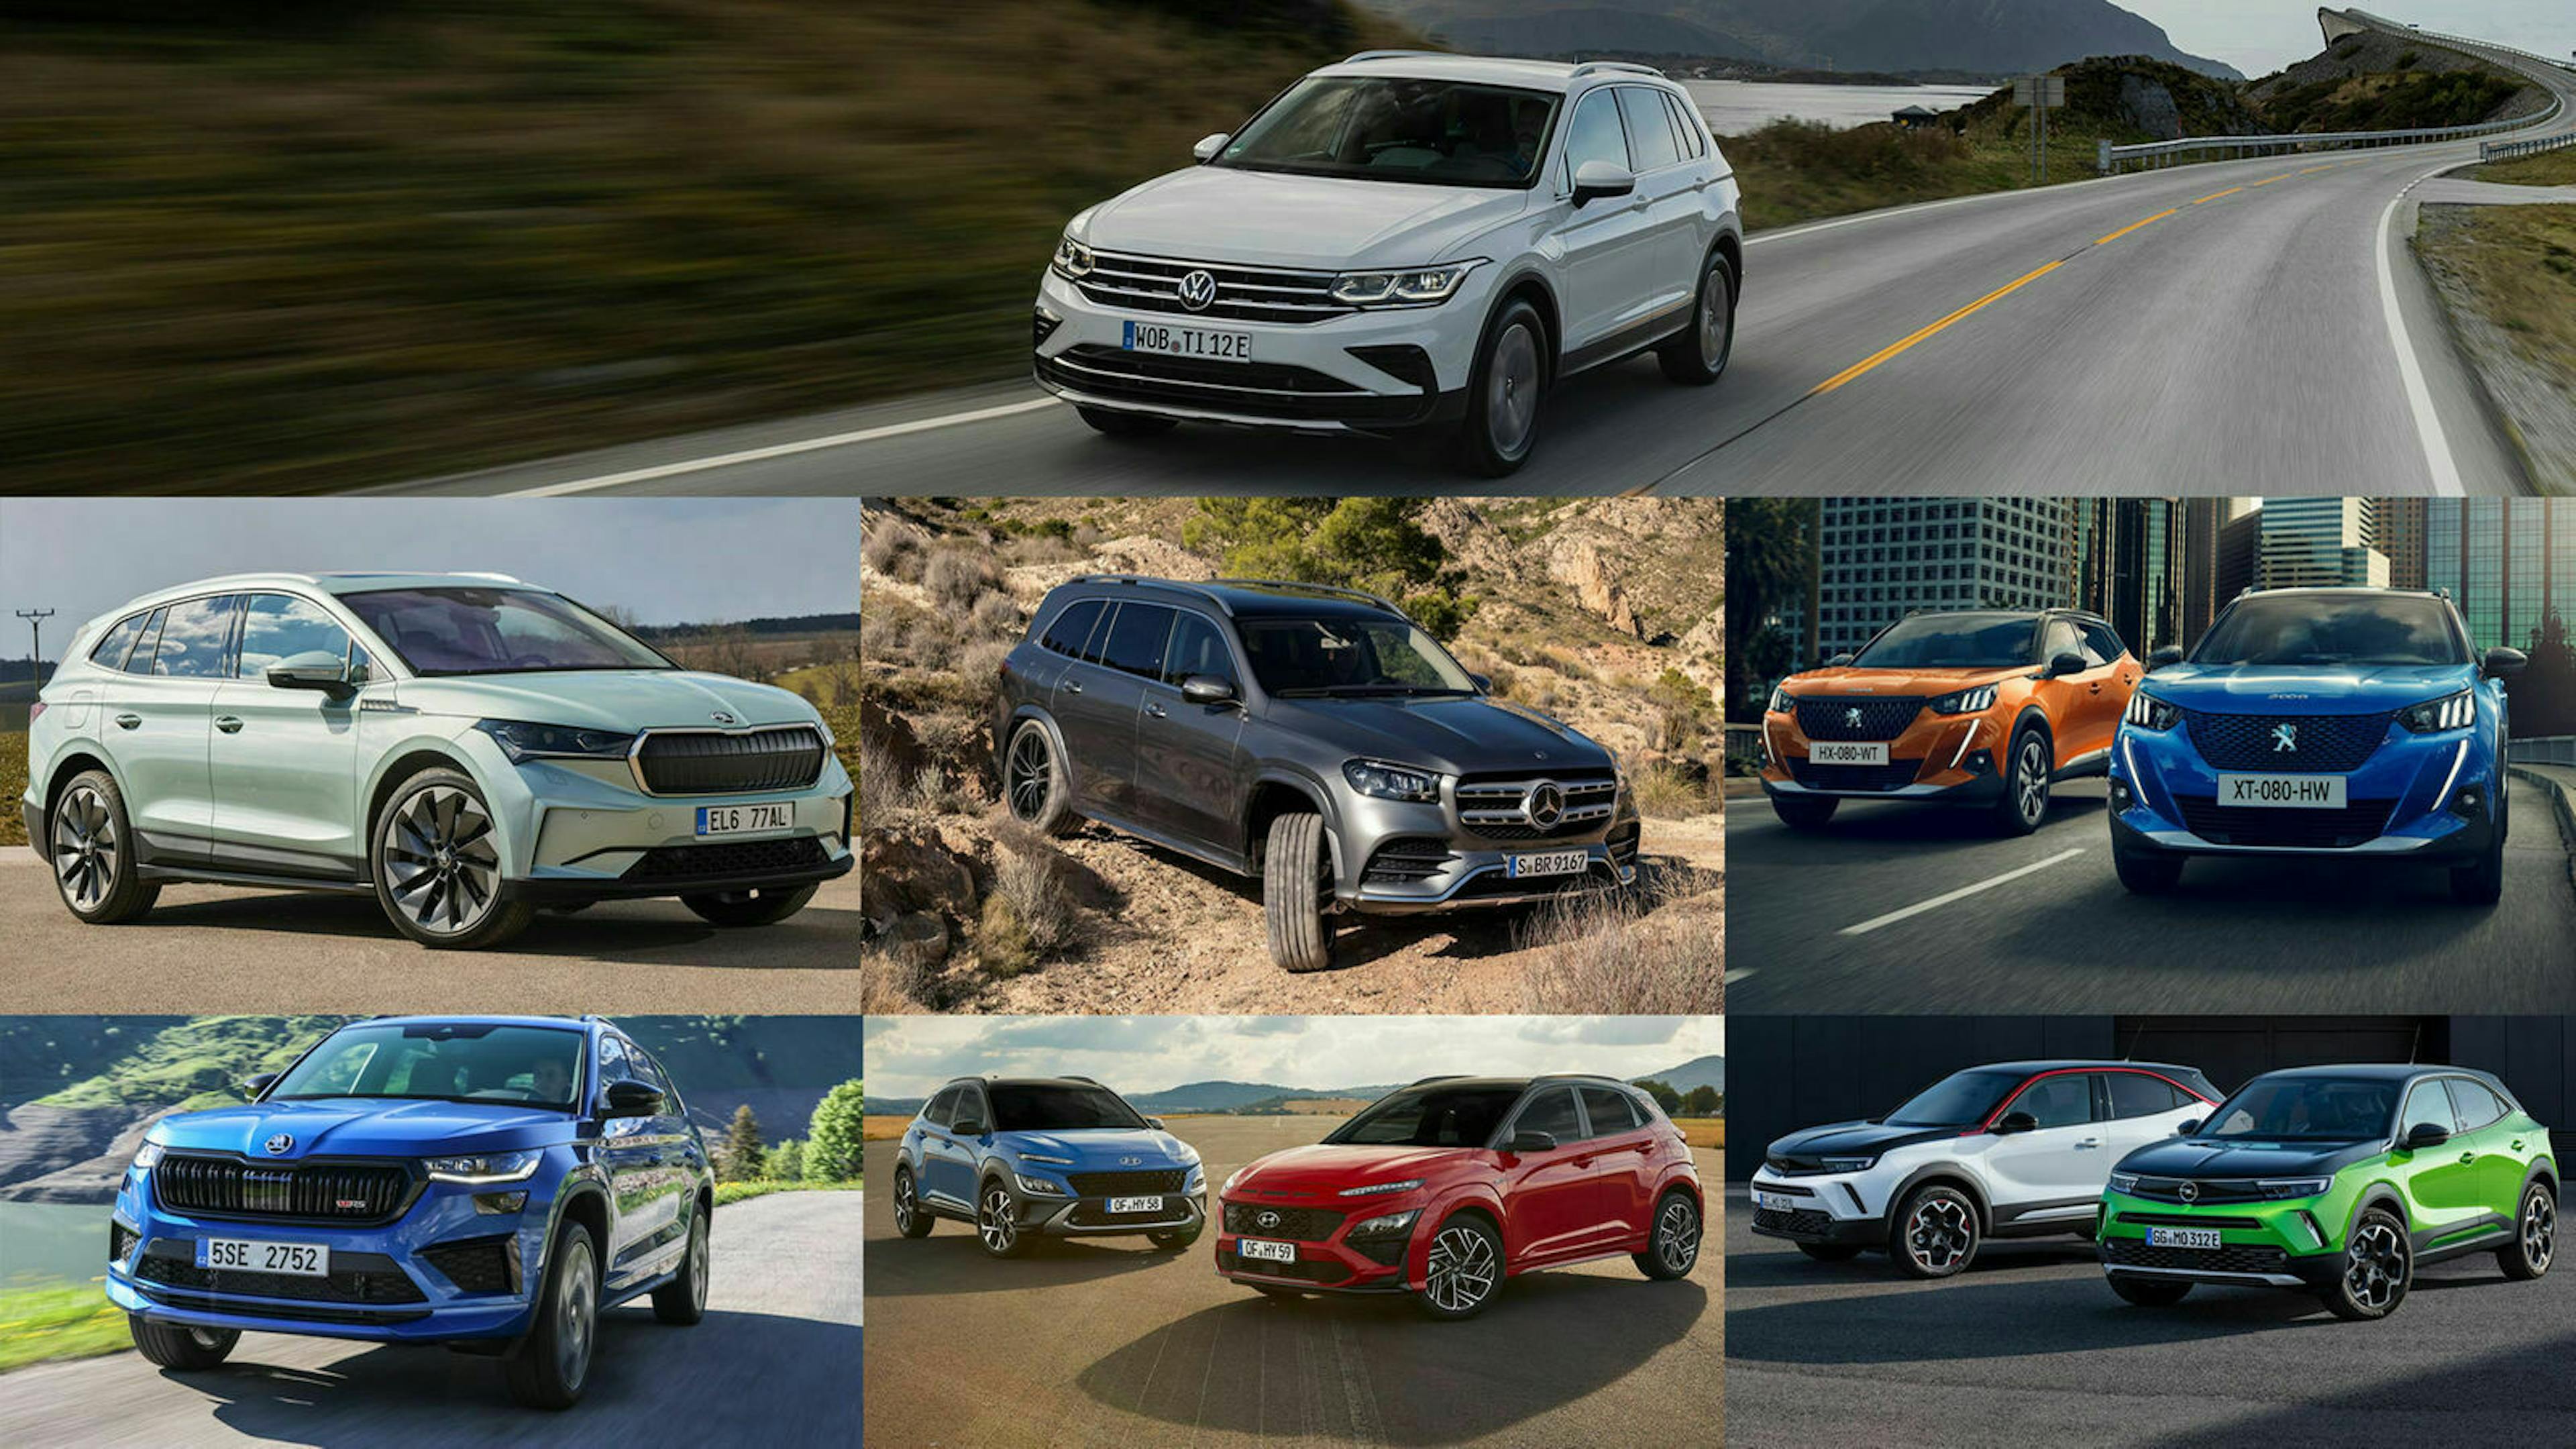 VW Tiguan, Skoda Enyaq, Mercedes GLS, Peugeot 2008, Skoda Kodiaq, Hyundai Kona und Opel Mokka in einer Collage 